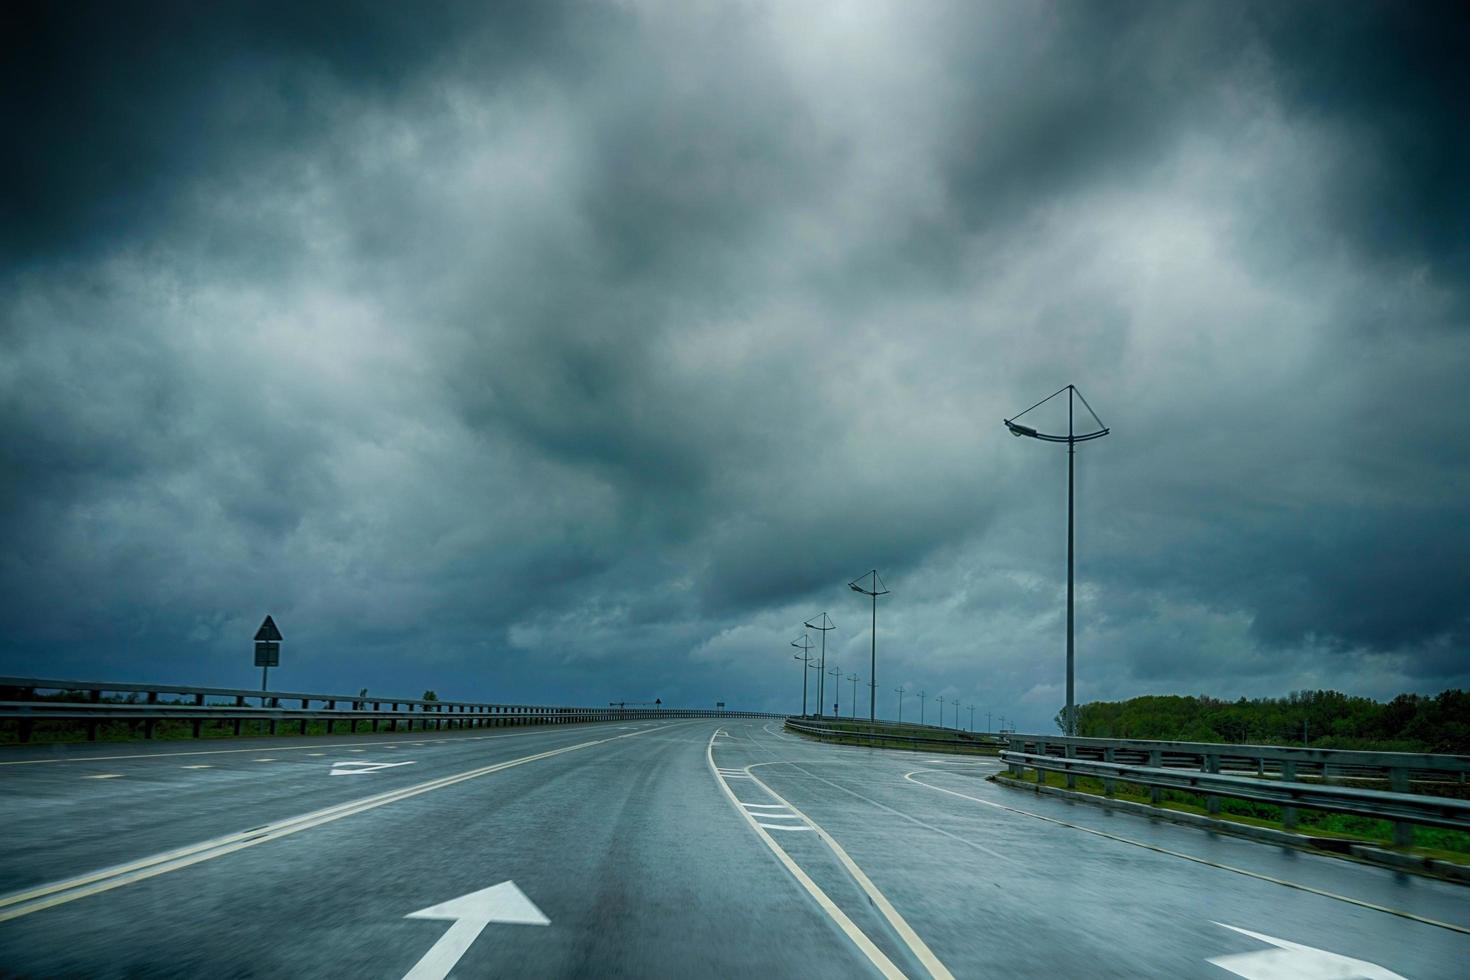 Wet road markings under a dark stormy sky in the Kaliningrad region photo